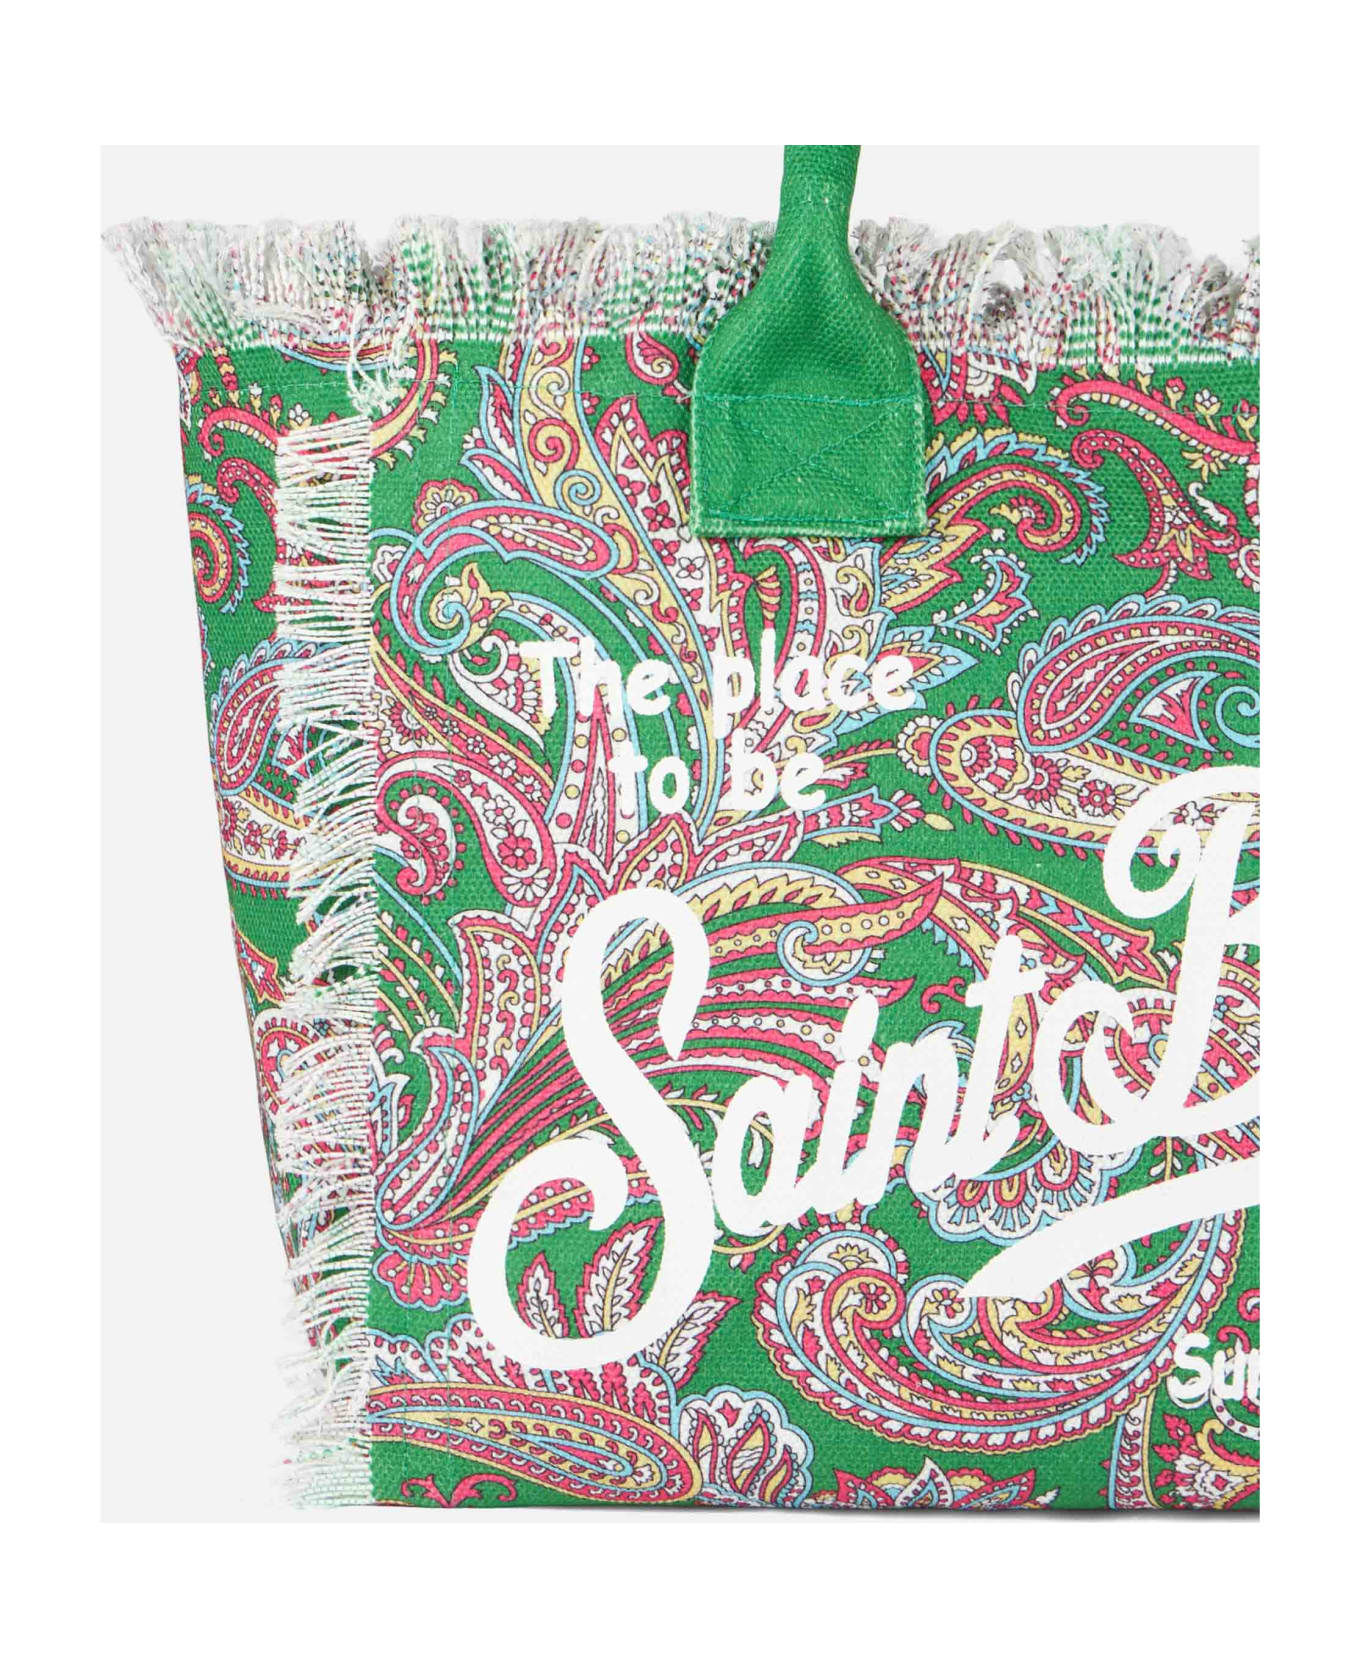 MC2 Saint Barth Vanity Canvas Shoulder Bag With Paisley Print - GREEN